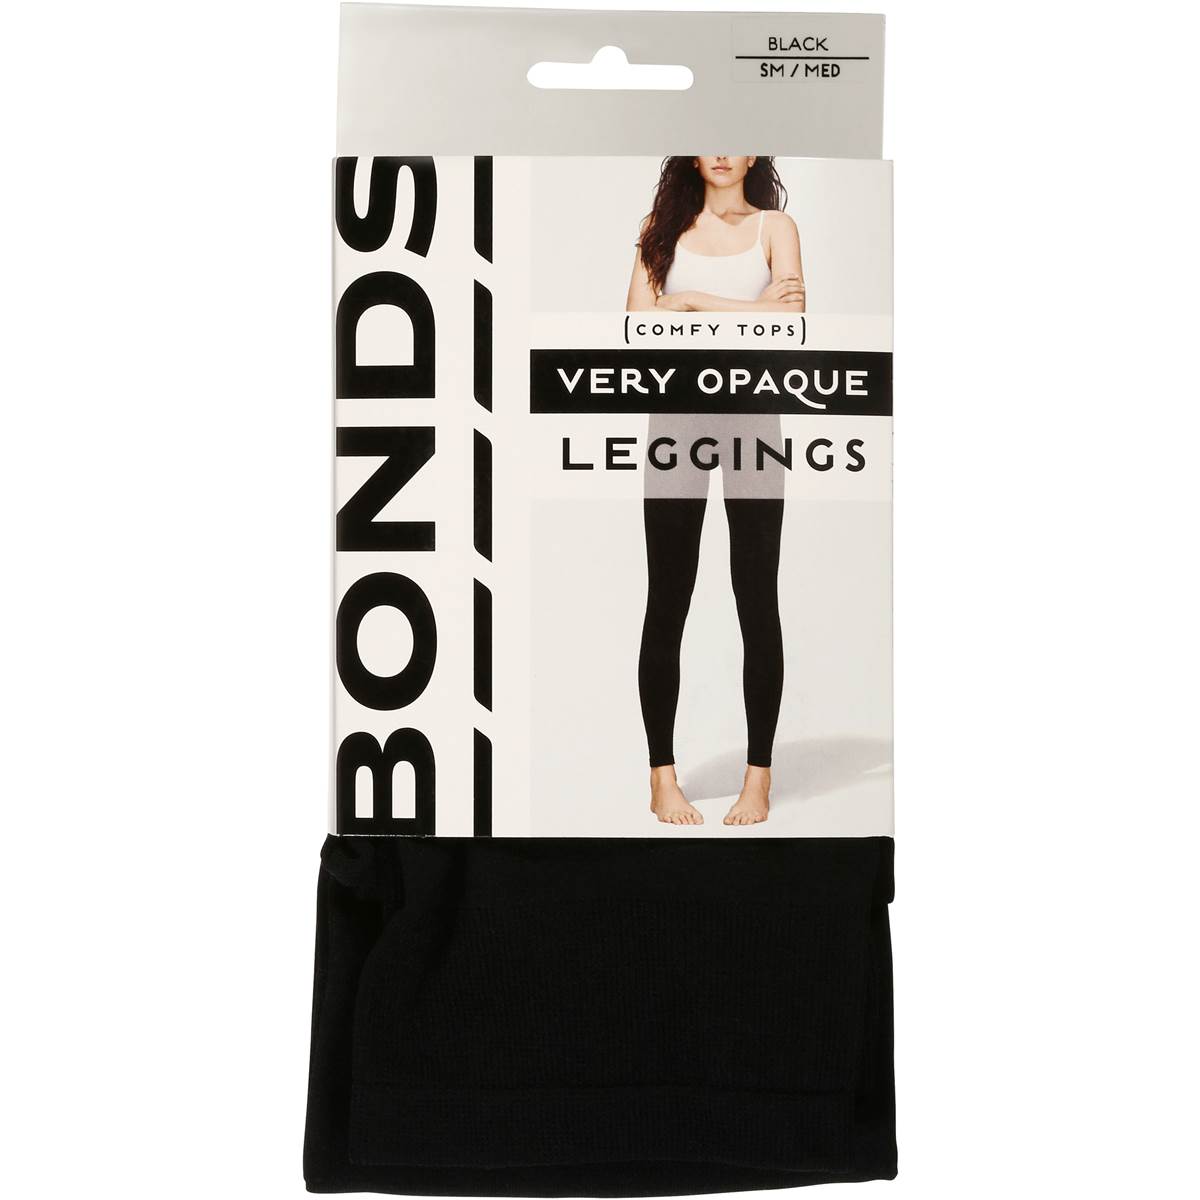 Bonds Comfy Tops Very Opaque Leggings Sml-med